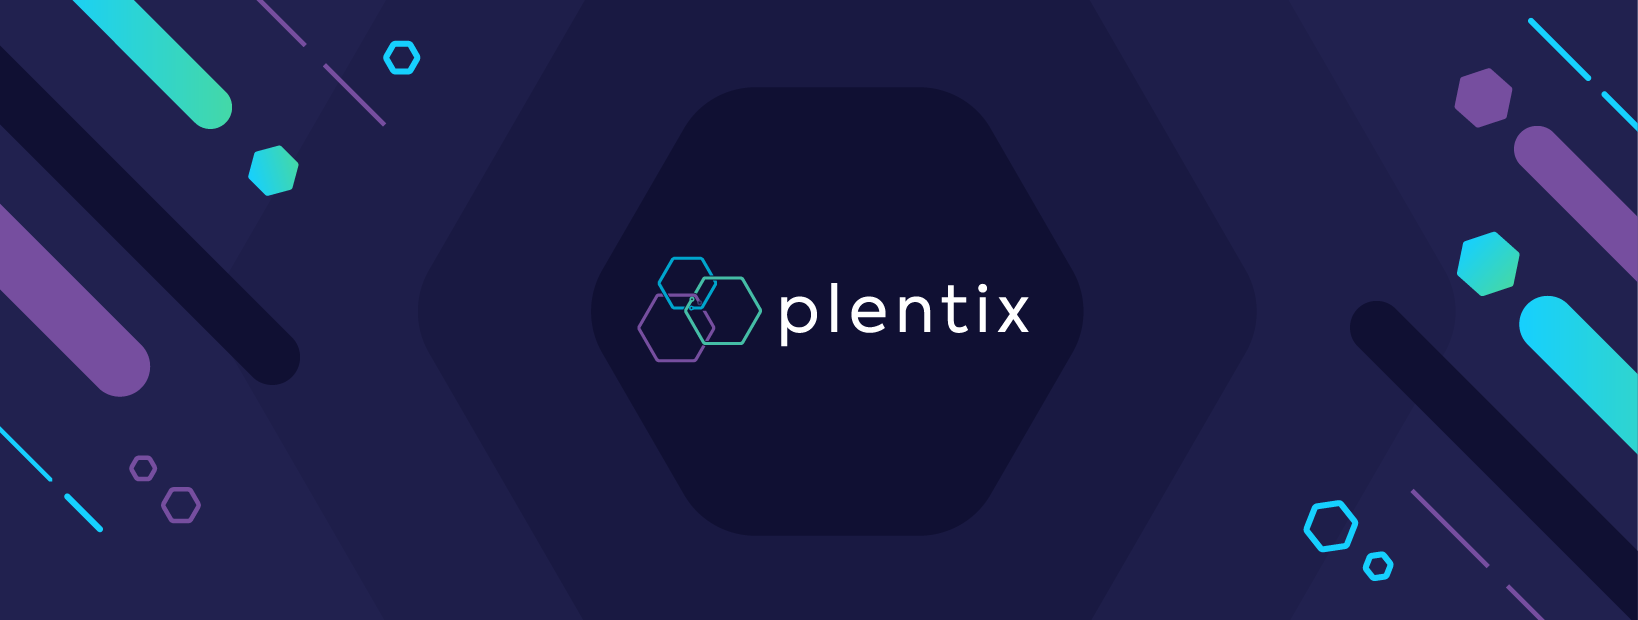 Logo plentix 2.png